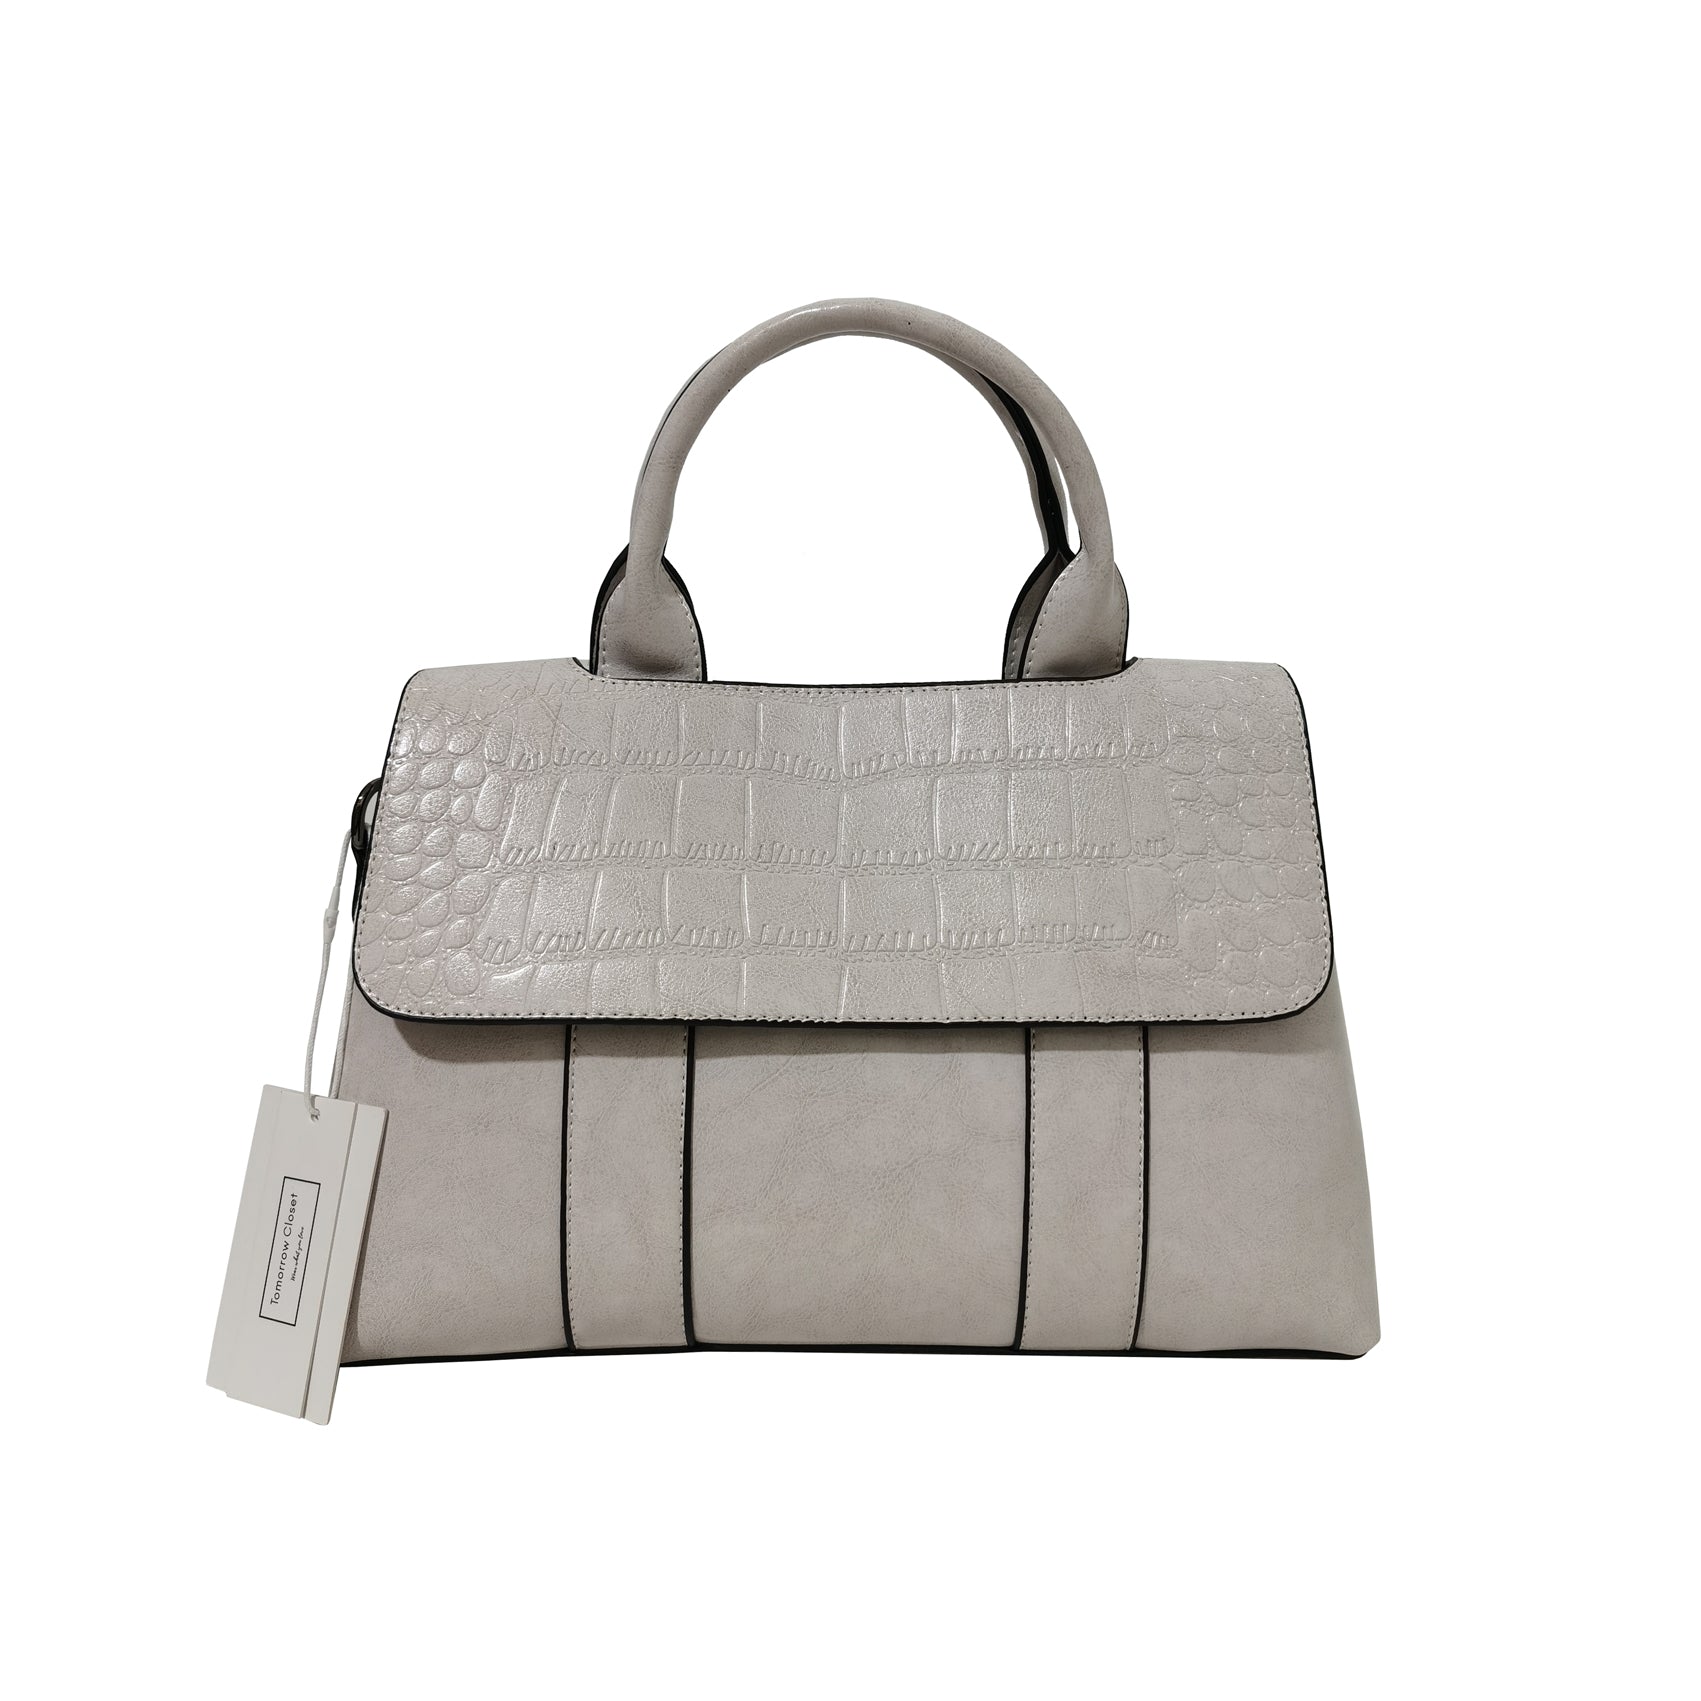 Women's genuine cowhide leather Handbag Perry design in crocodile print by Tomorrow Closet